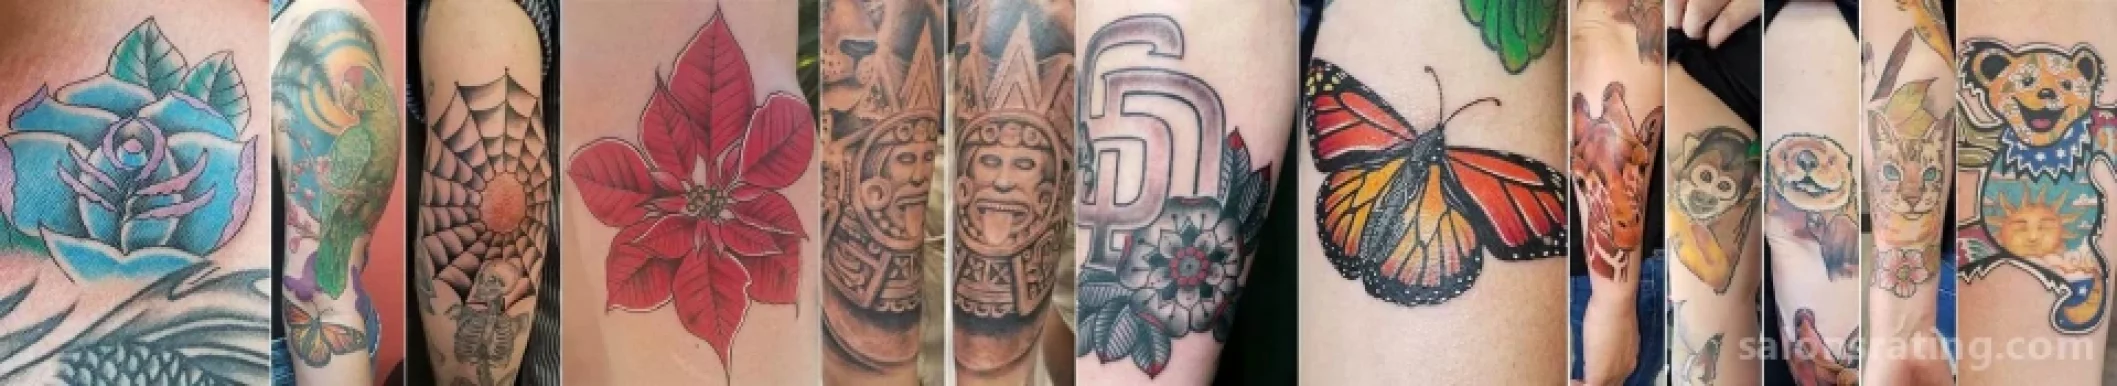 Mission Valley Tattoo, San Diego - Photo 2